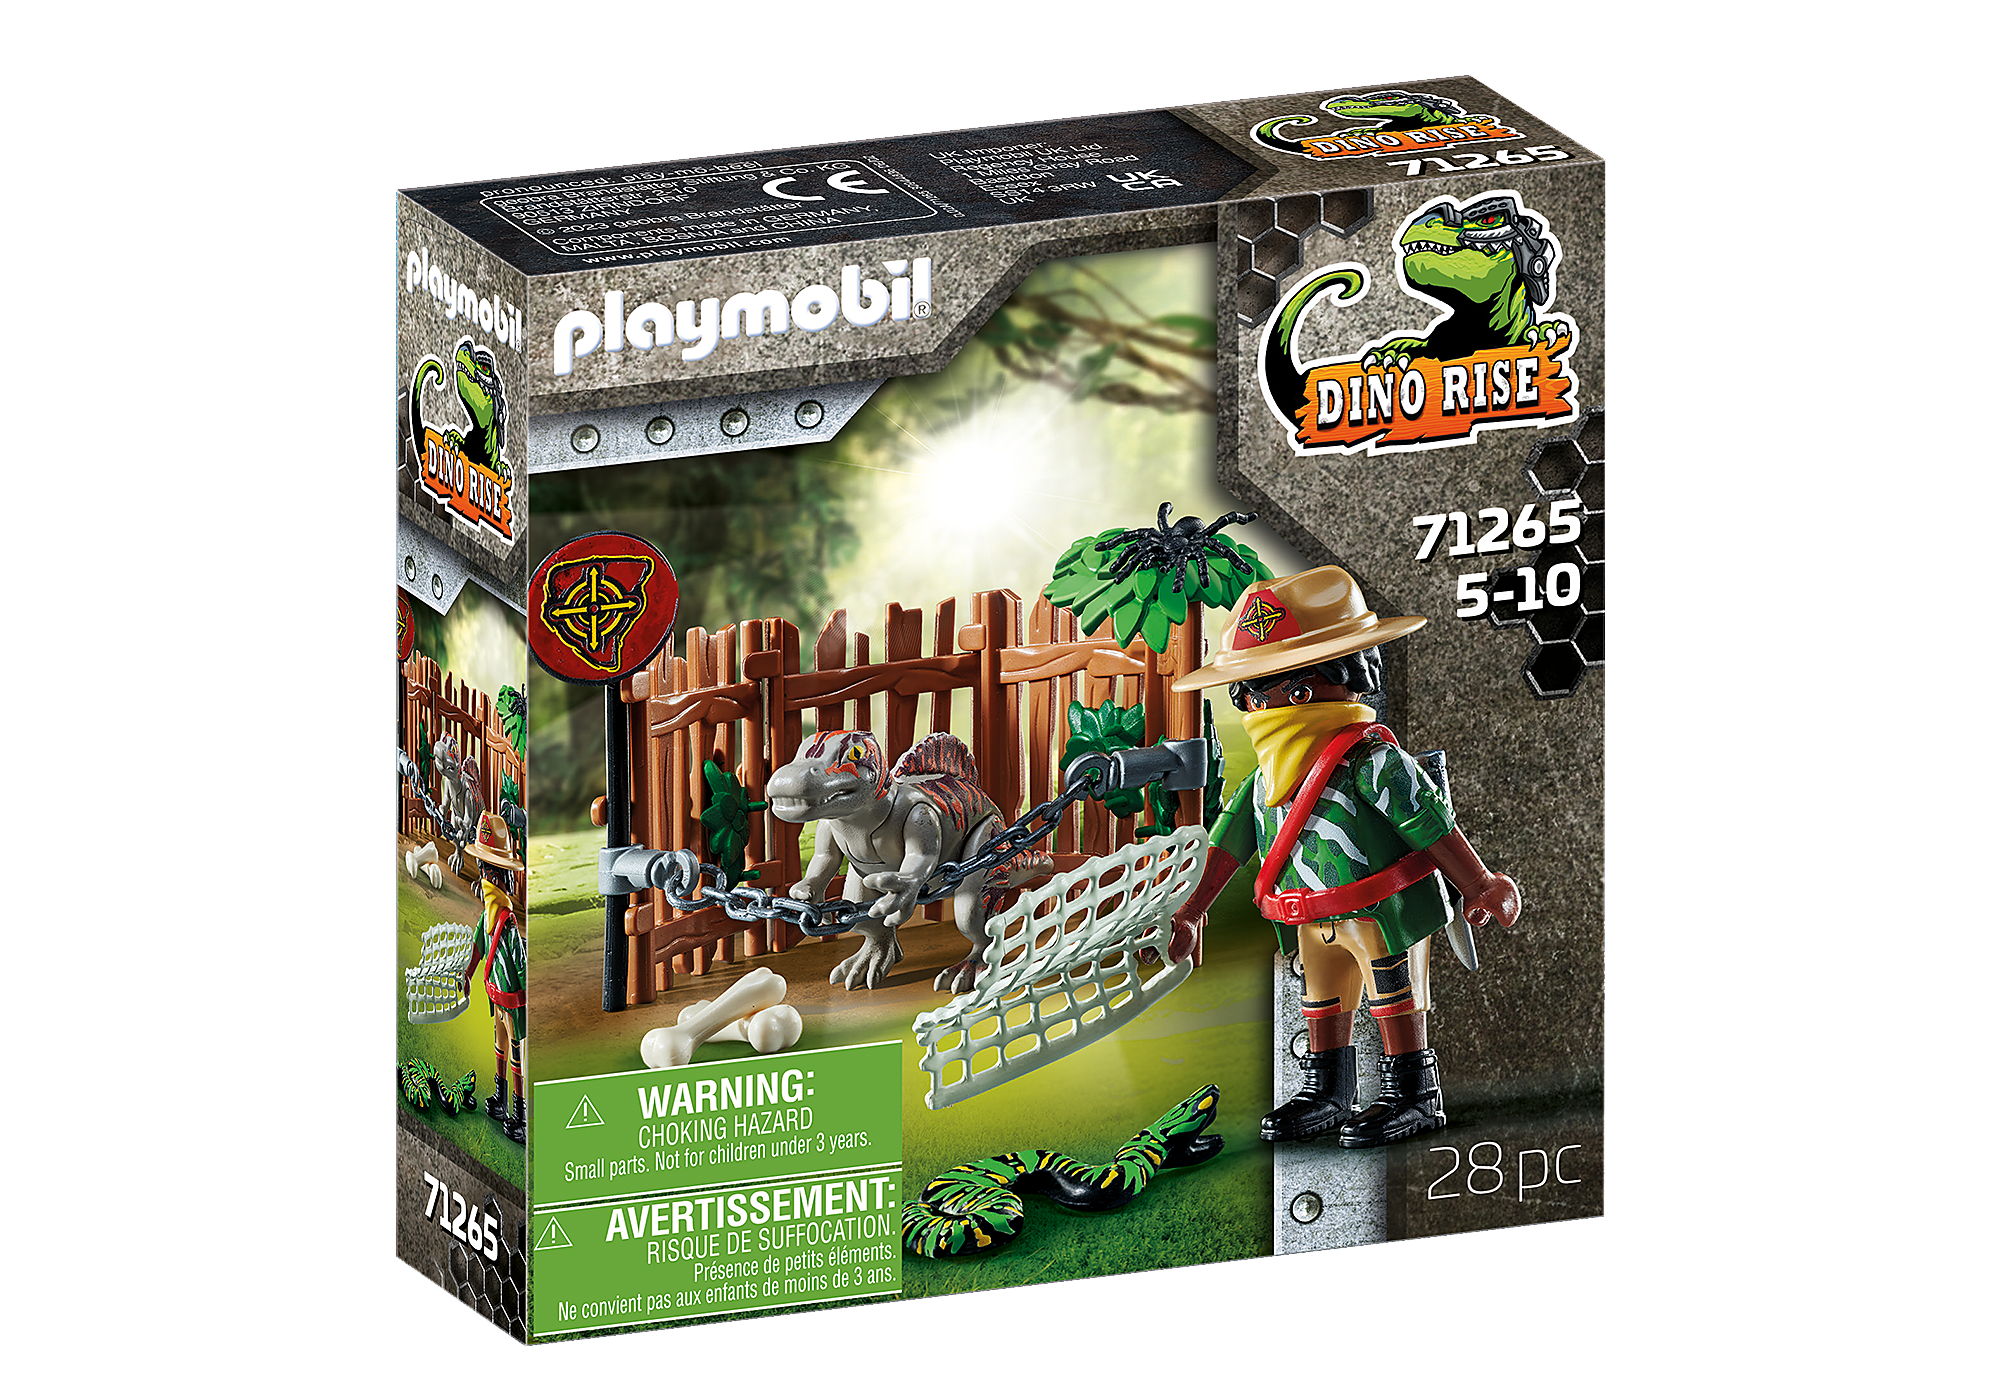 Club enfants Playmobil Family Fun - Playmobil Playmobil